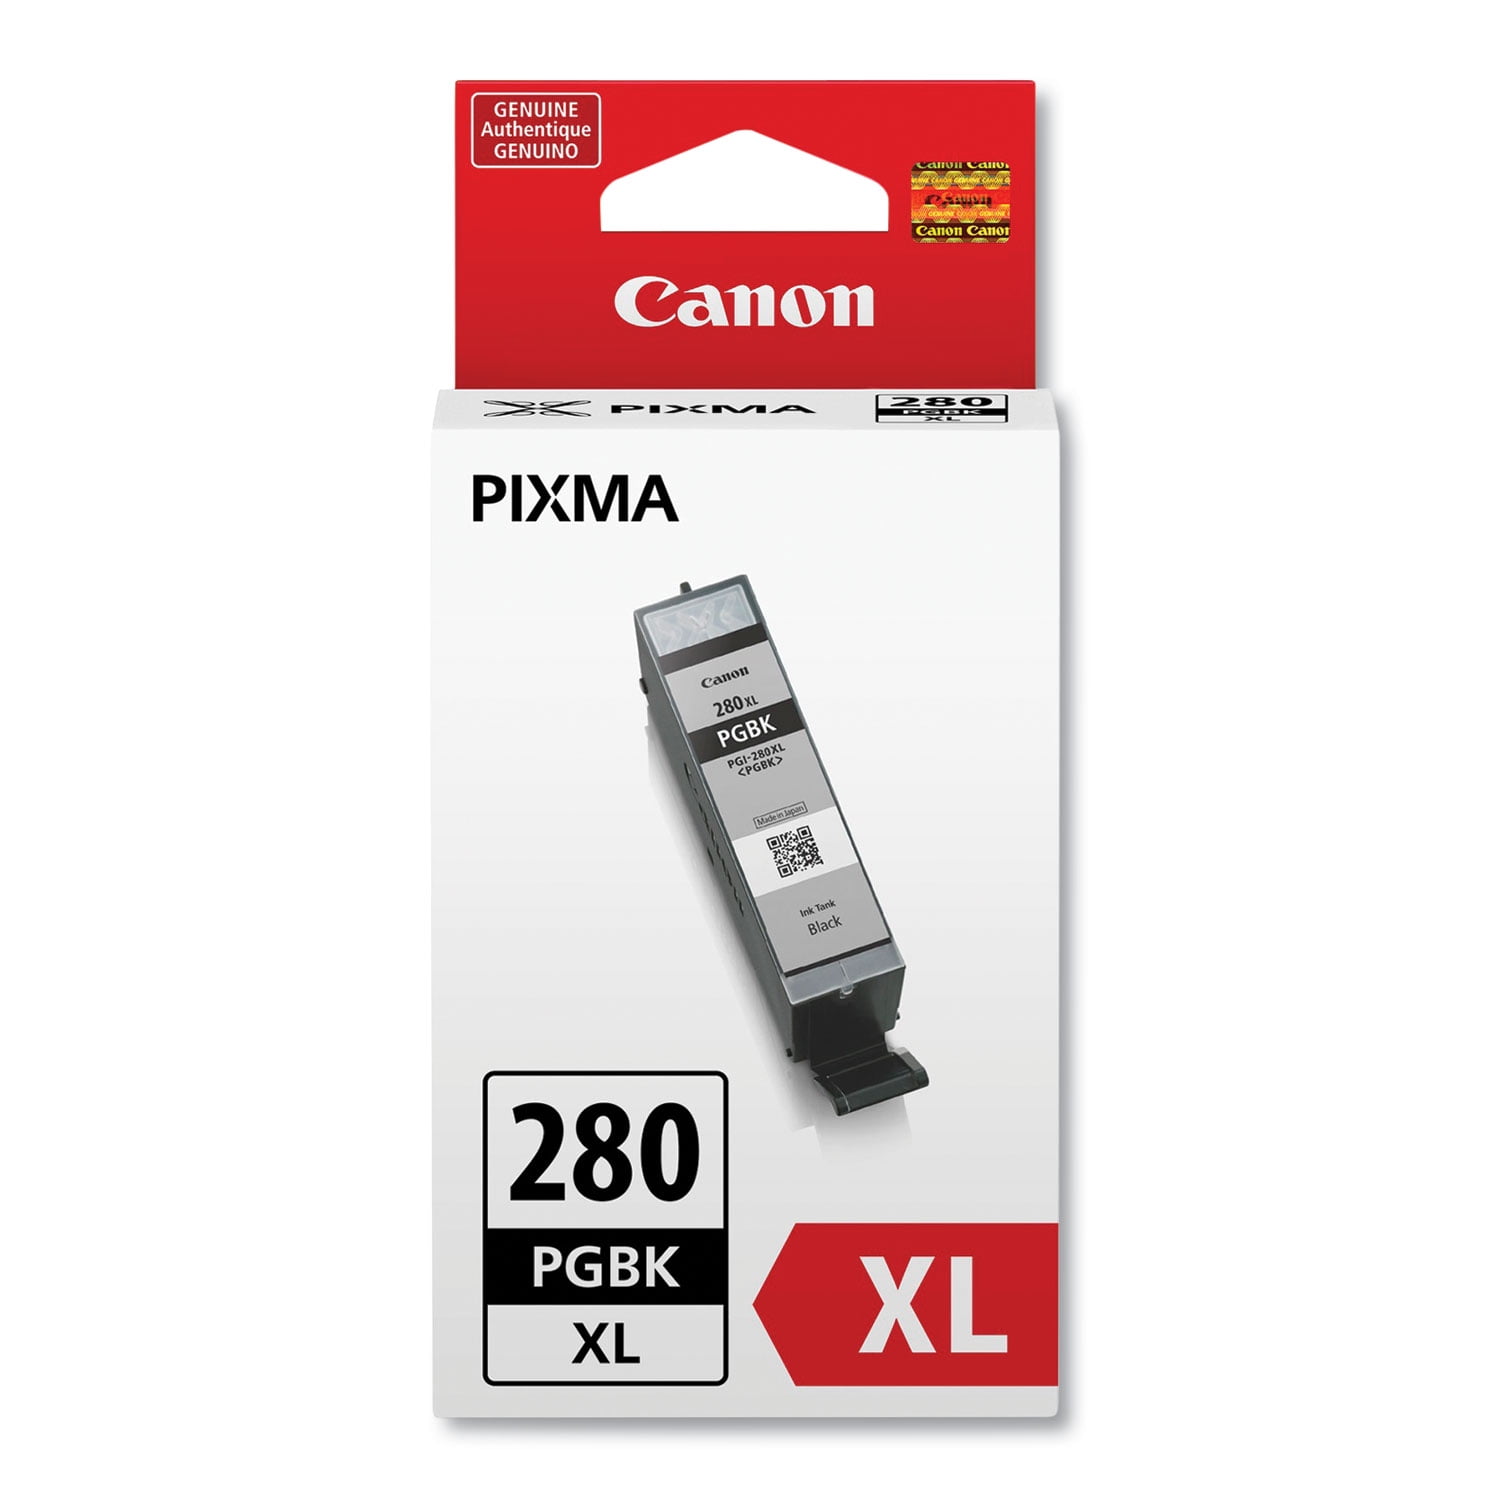 Buy Canon PGI-570 XL High Capacity Ink Cartridge - Black, Printer ink